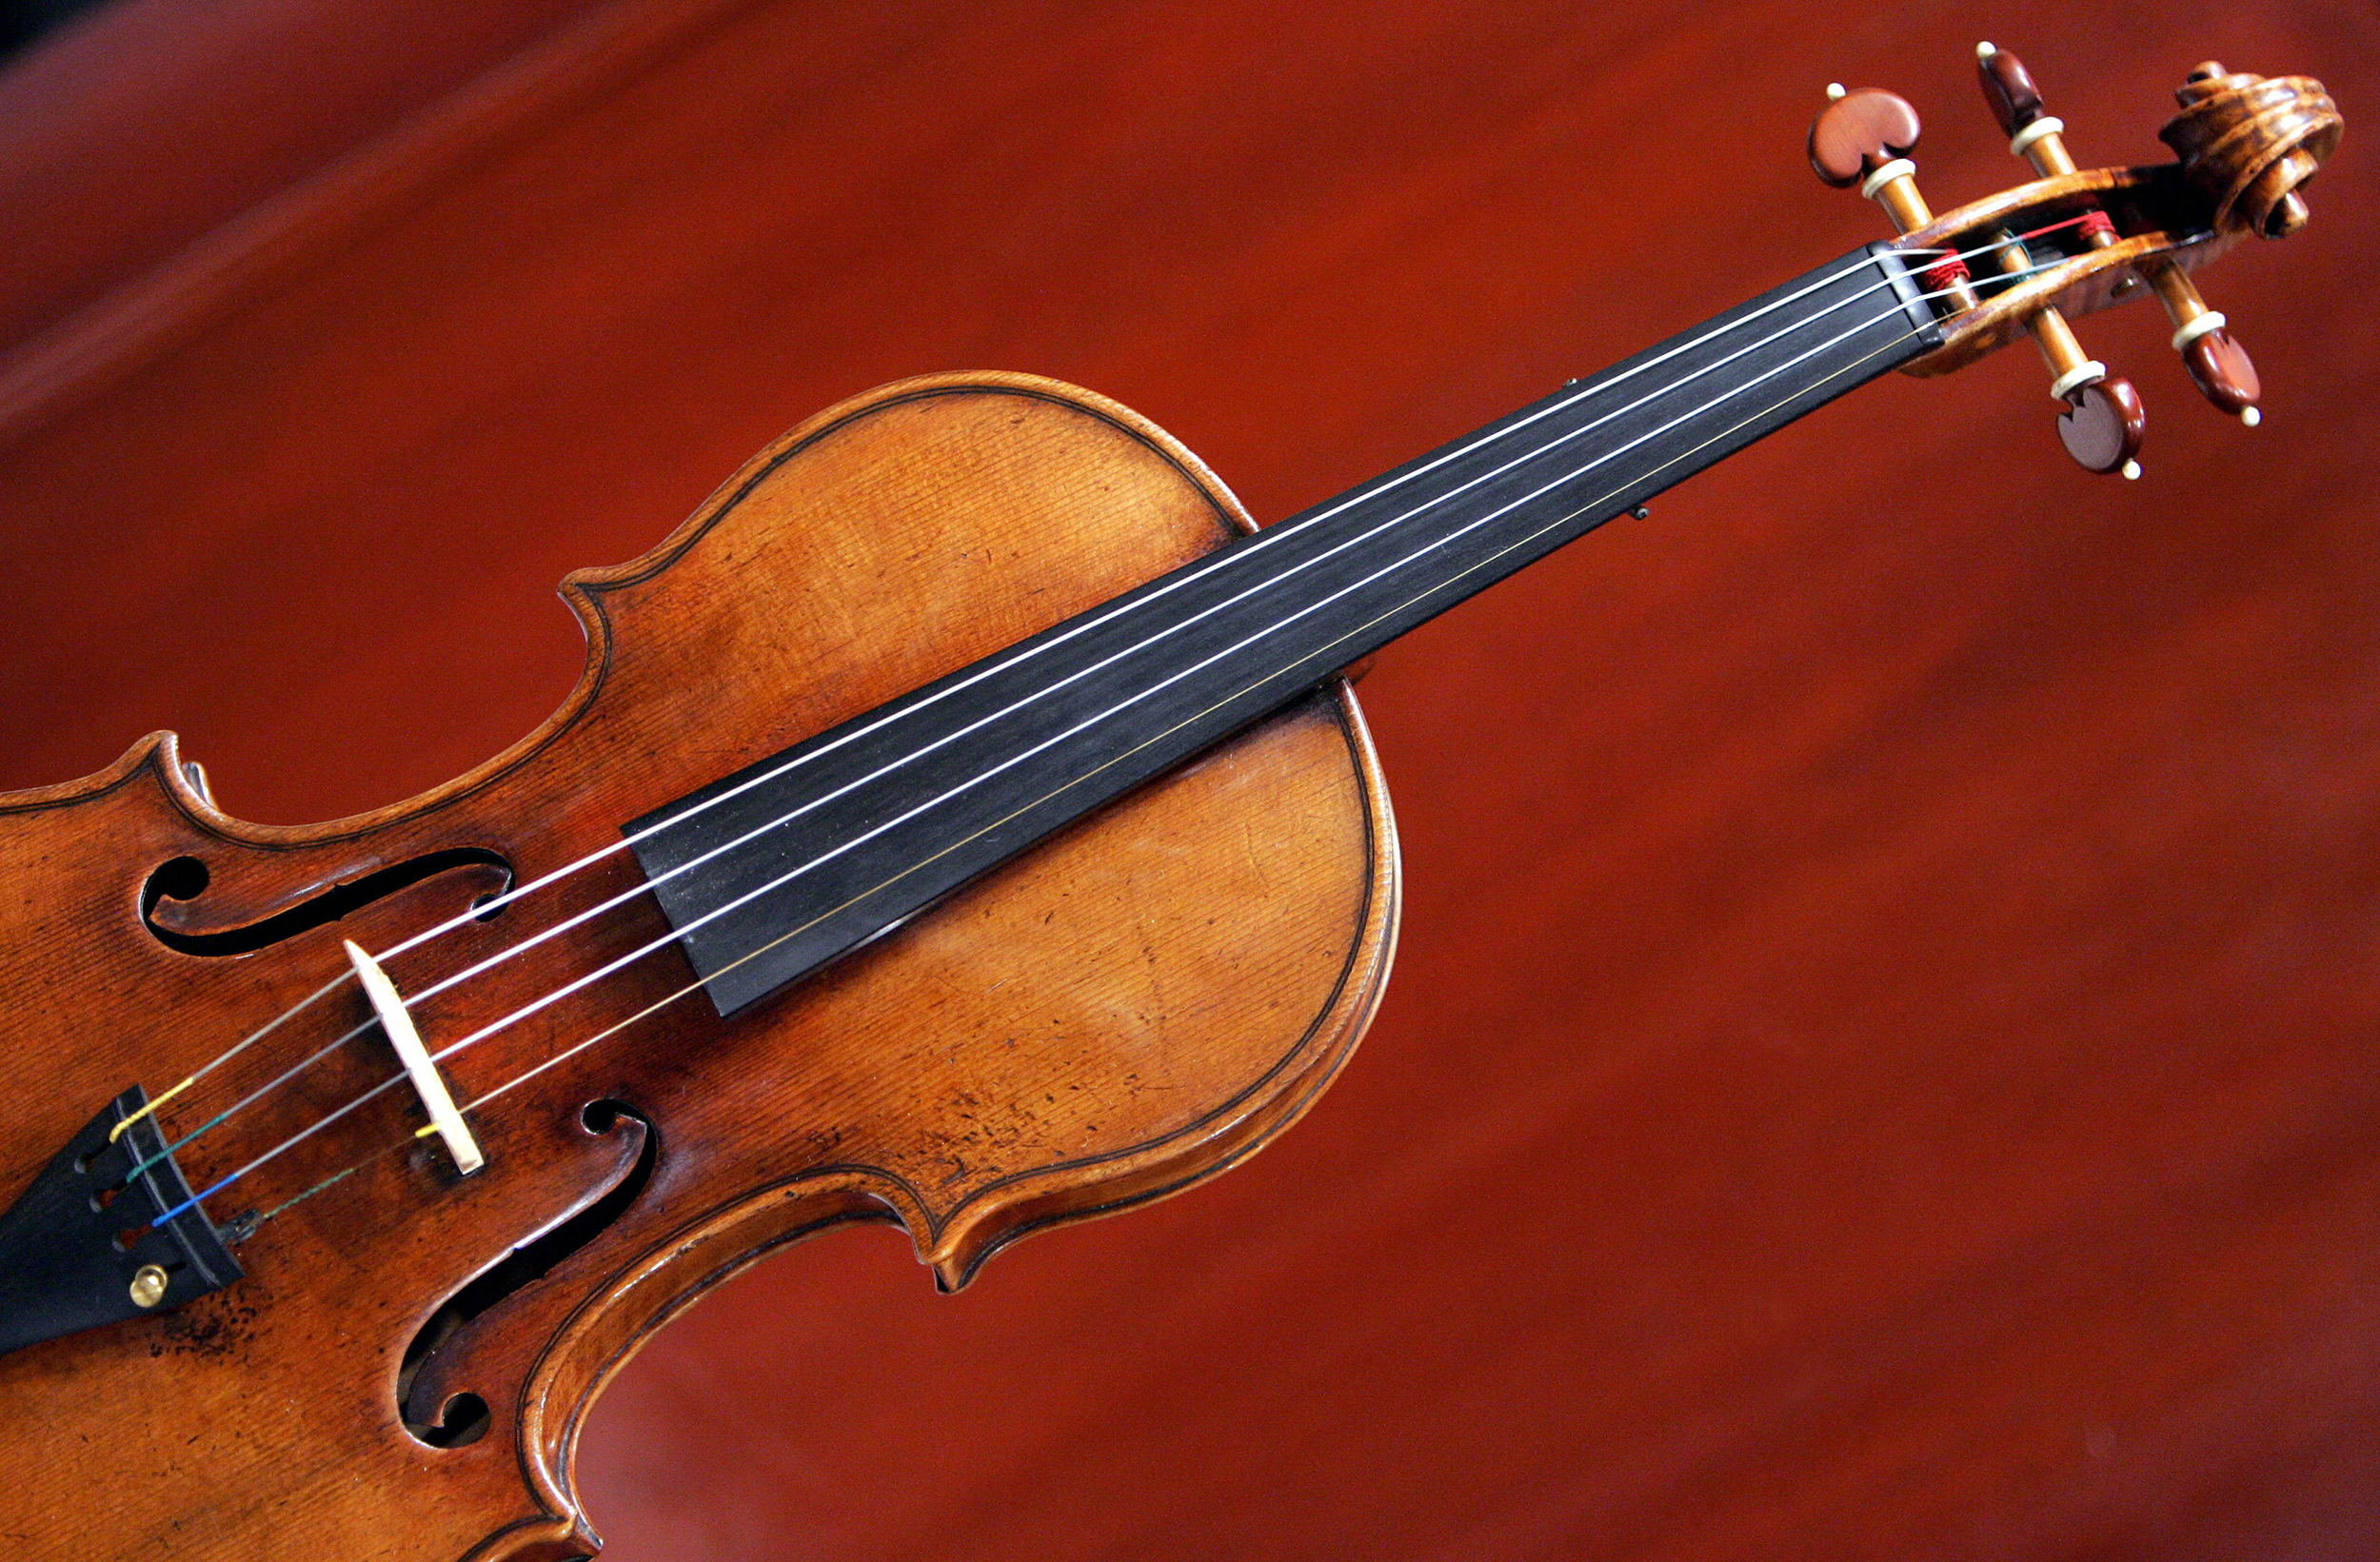 300-year-old Stradivarius violin stolen from